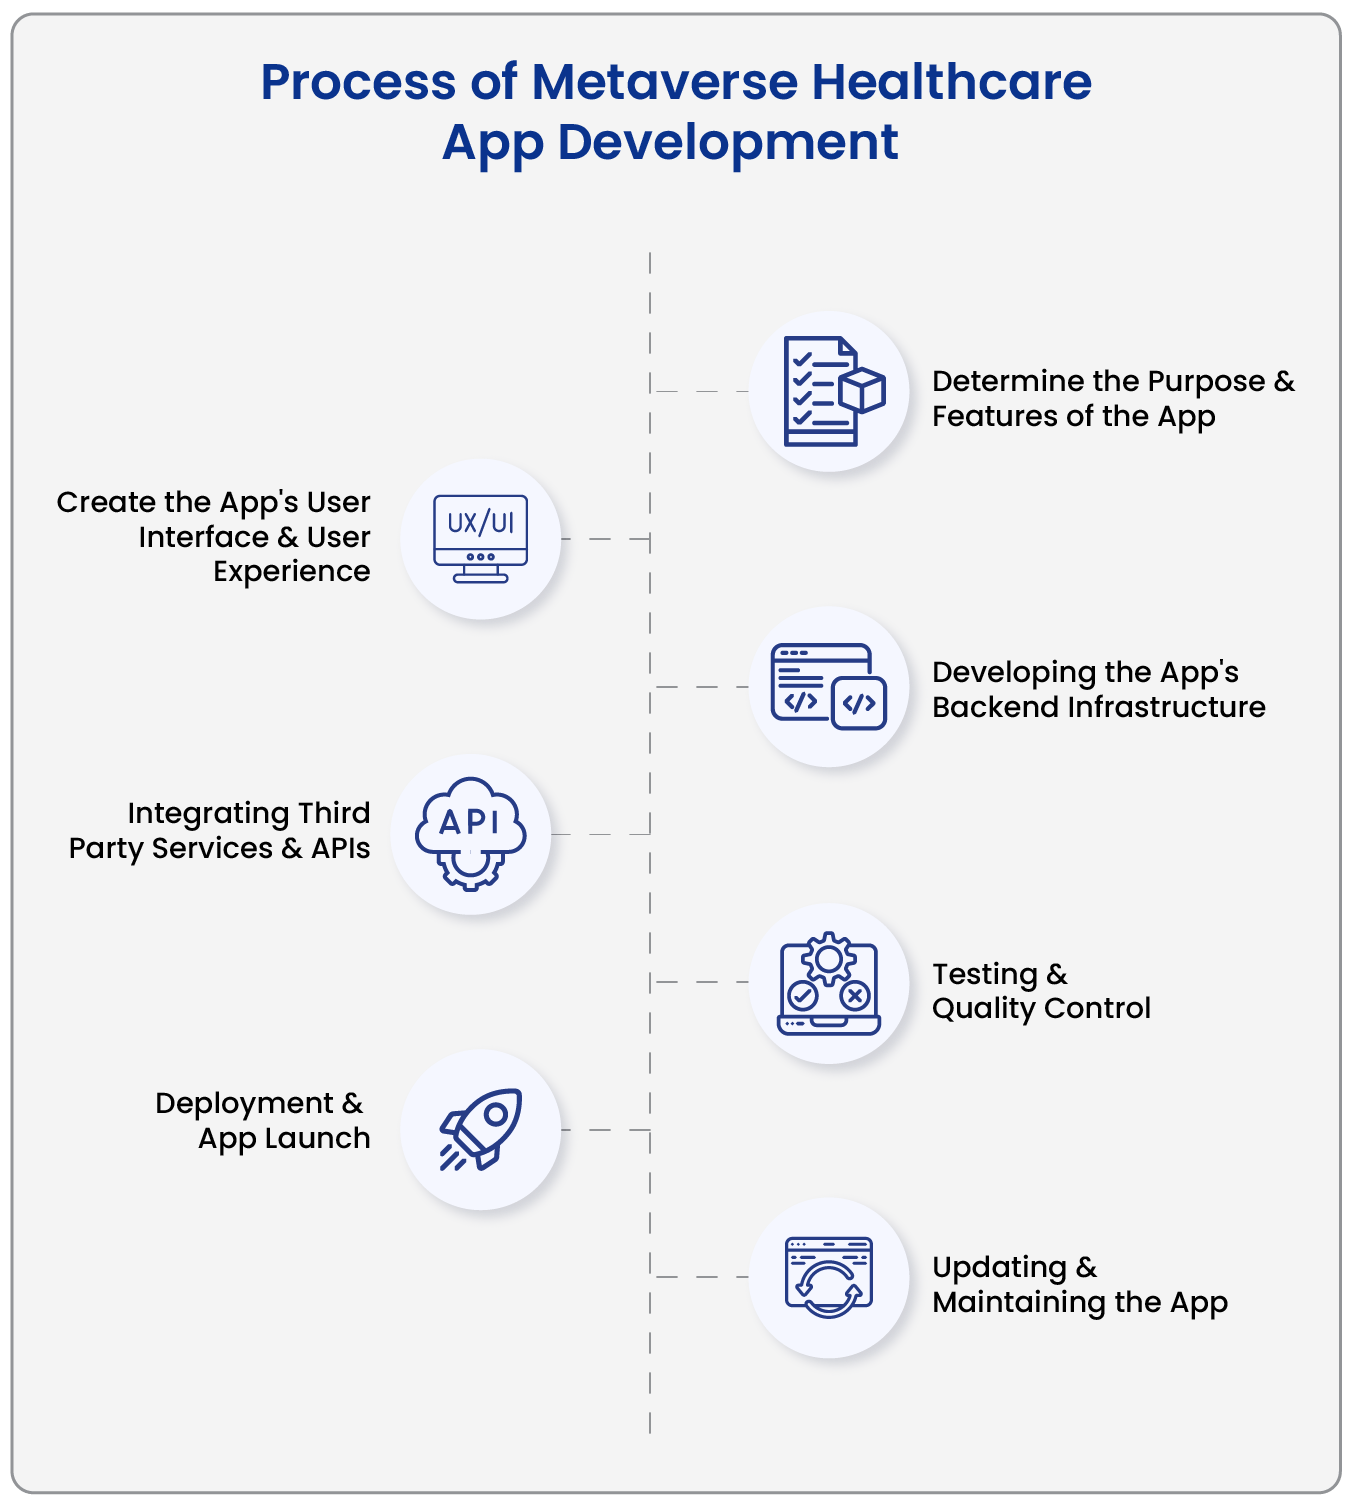 Process of Metaverse Healthcare App Development